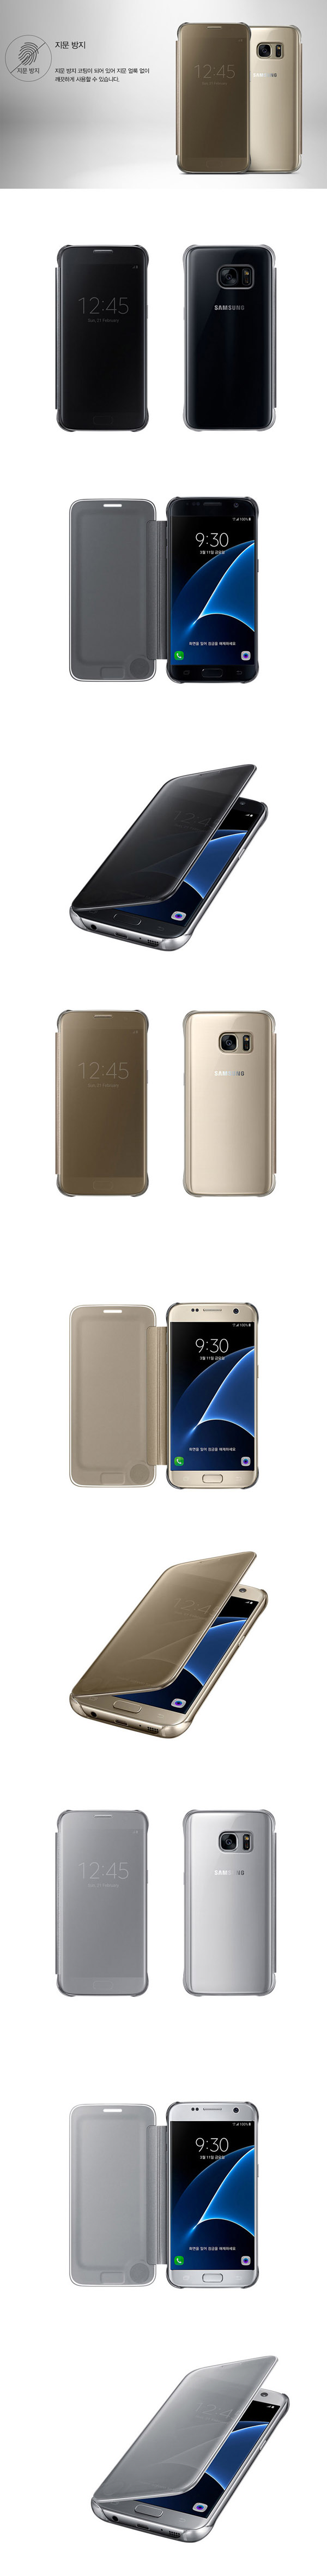 Bao da Galaxy S7 Clear View chính hãng Samsung (Full Box) 236